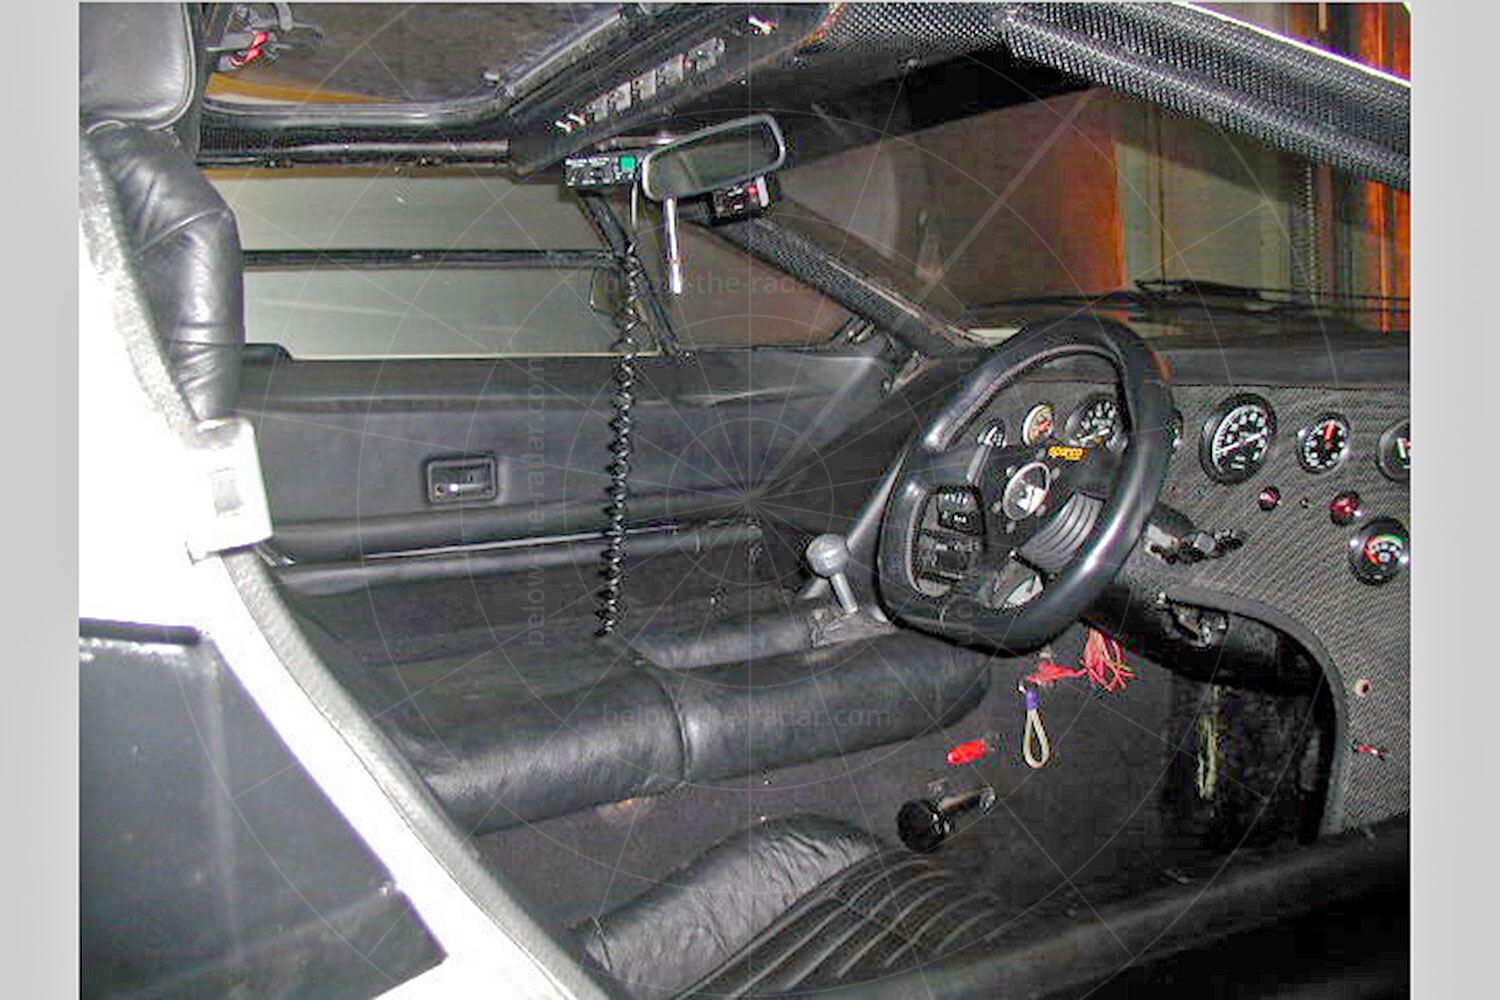 Mike Ryan's amphibious Lamborghini Countach - interior Pic: magiccarpics.co.uk | Mike Ryan's amphibious Lamborghini Countach - interior